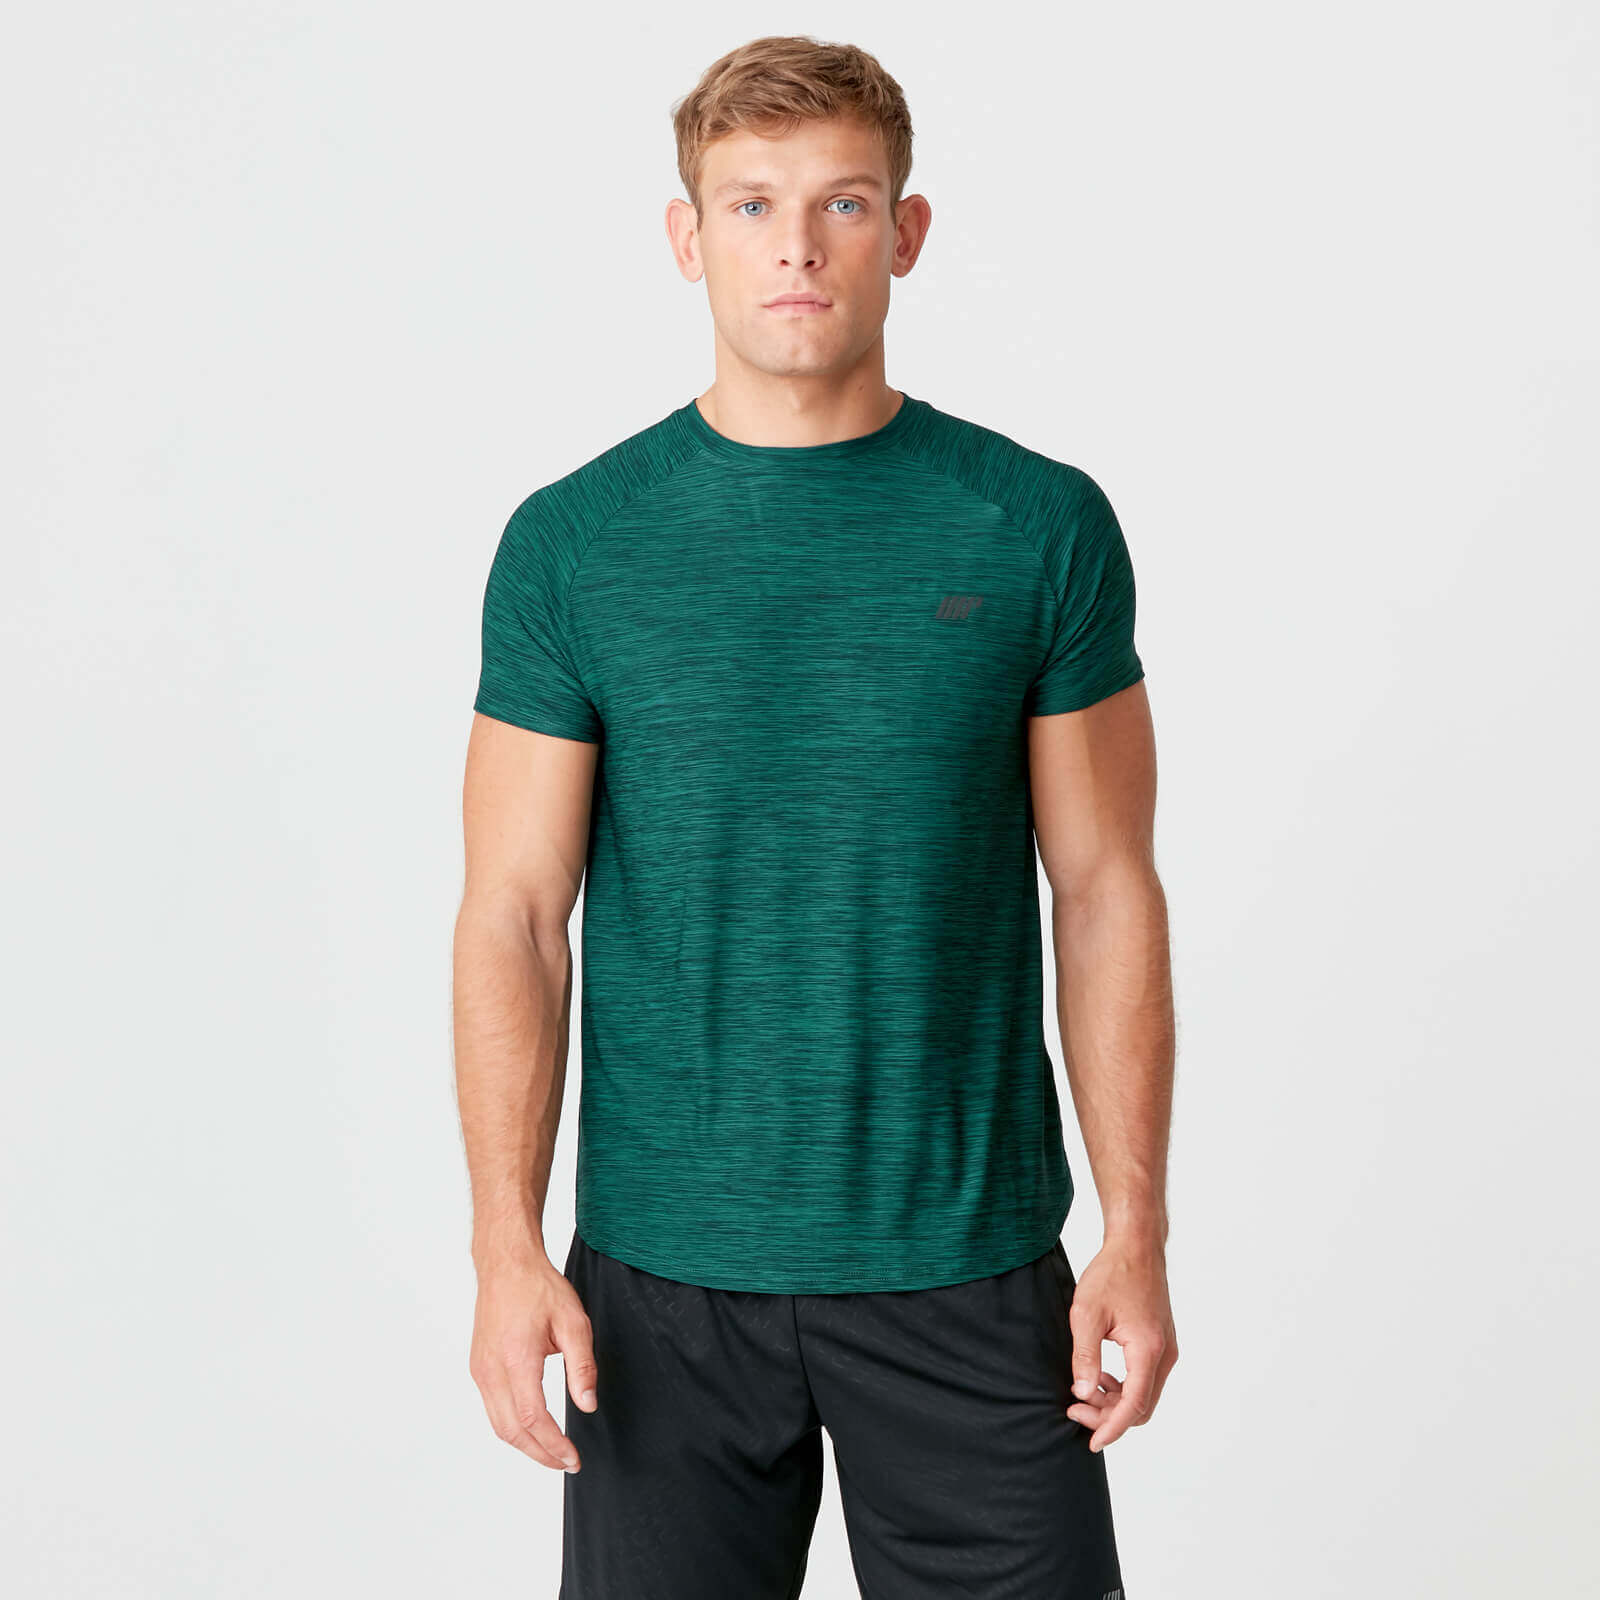 Dry Tech 速乾系列 男士運動健身T恤 - 深綠